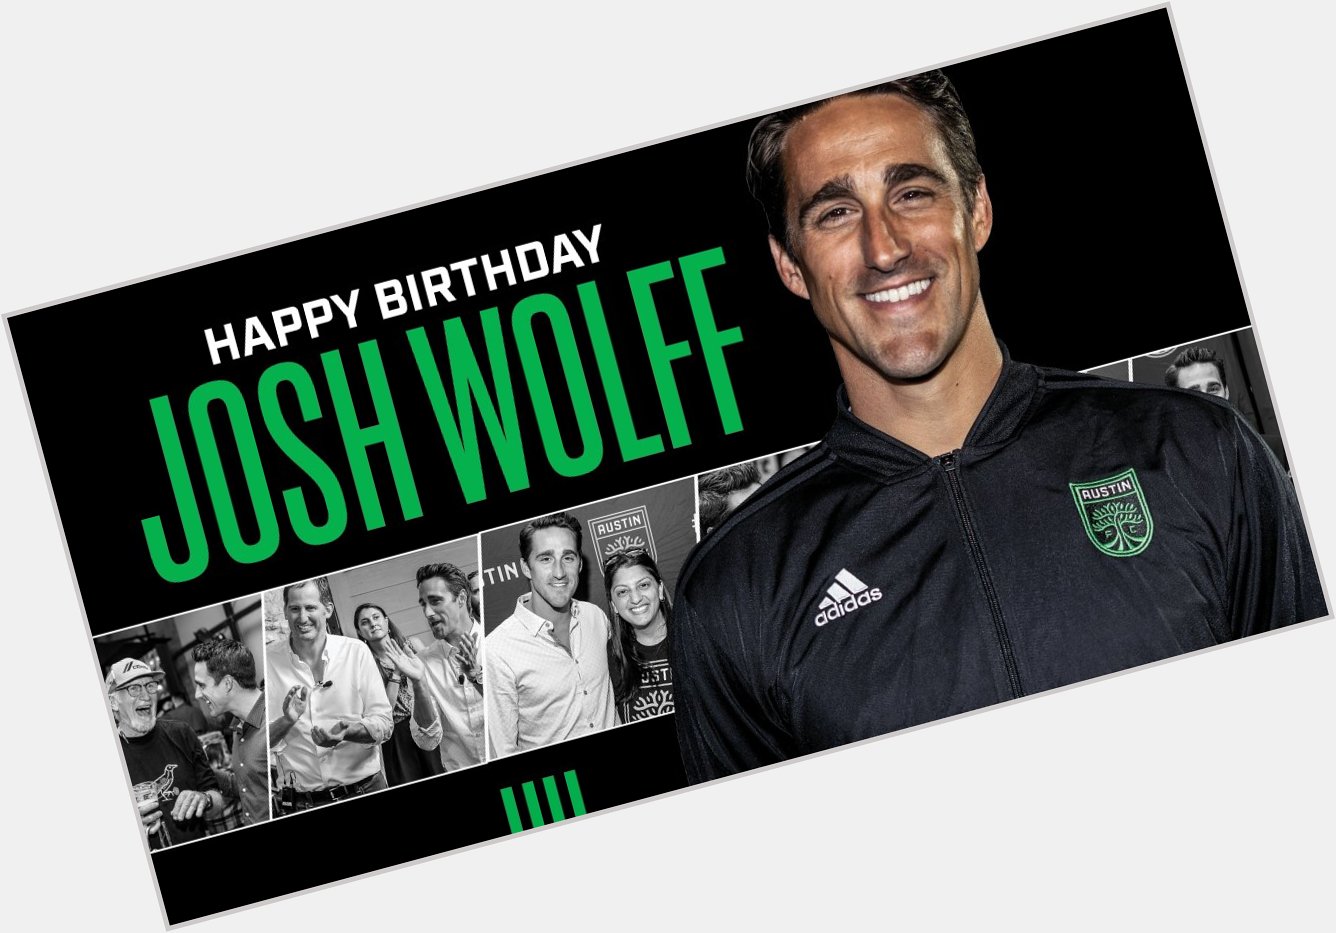 Happy Birthday to our Head Coach Josh Wolff! 